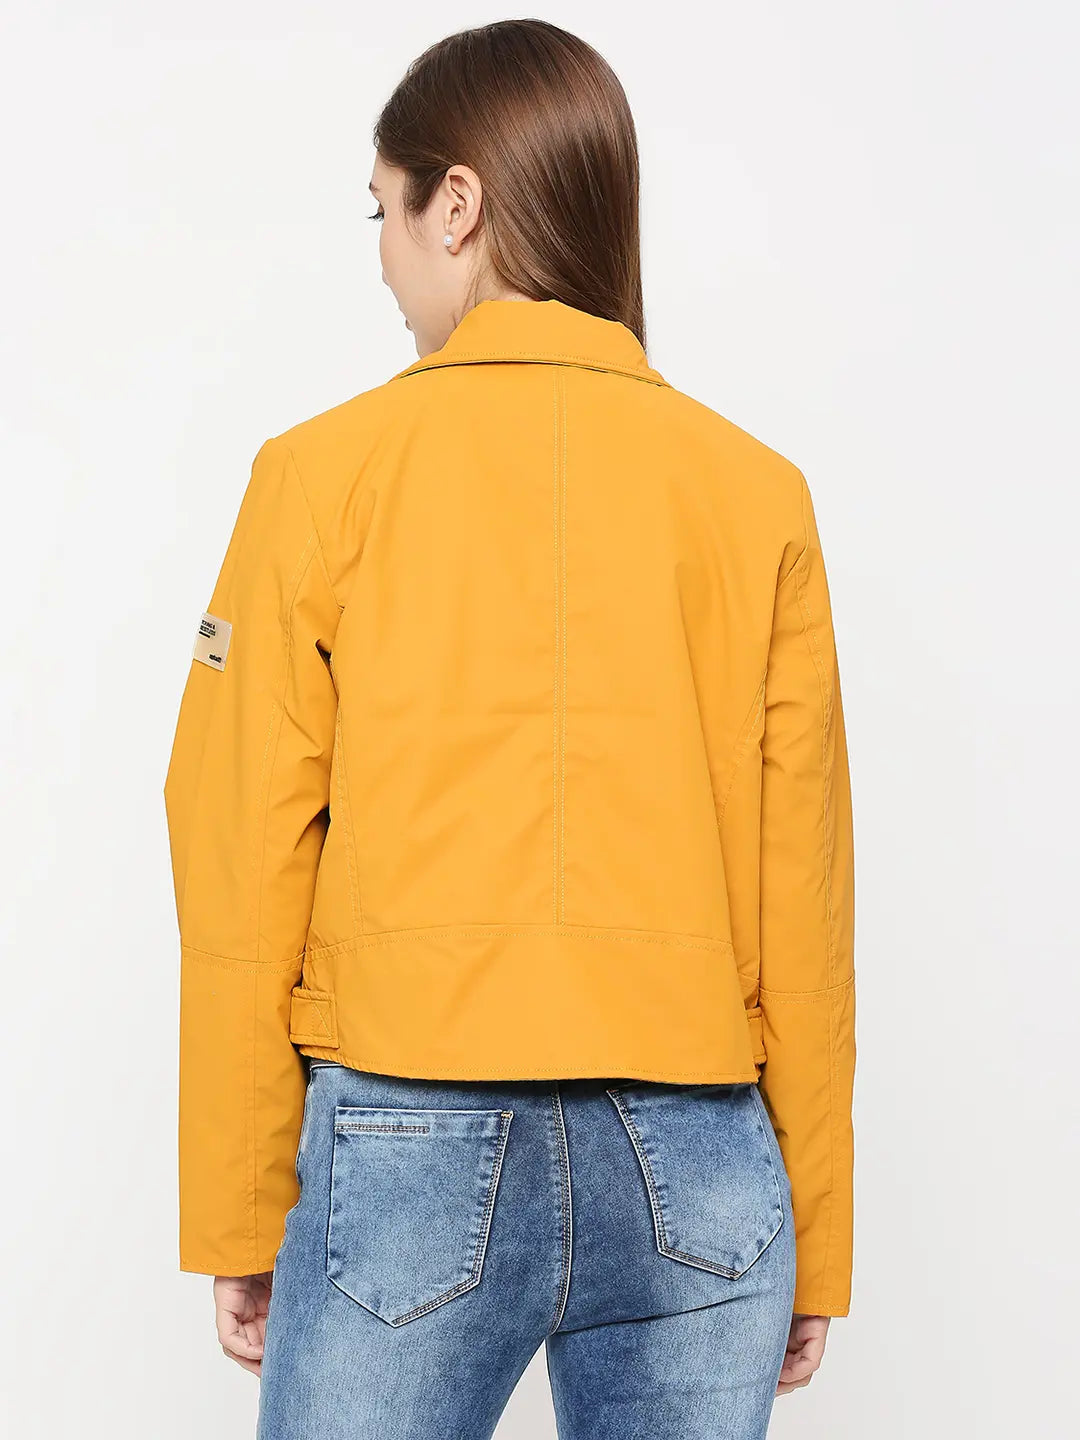 Spykar Mustard Full Sleeve Casual Jacket For Women